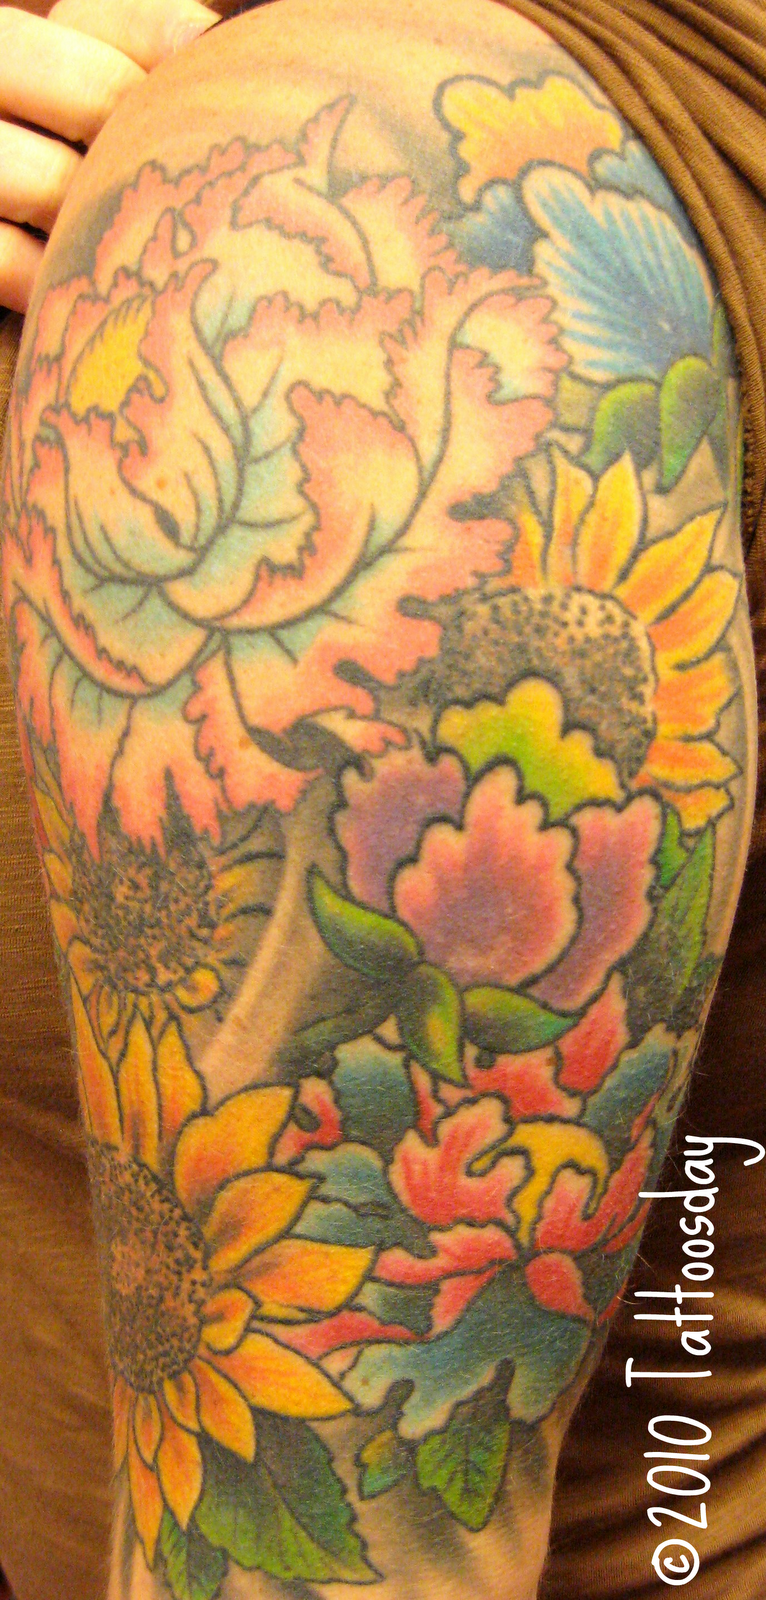 Tattoosday (A Tattoo Blog): Jessica's Floral Half-Sleeve